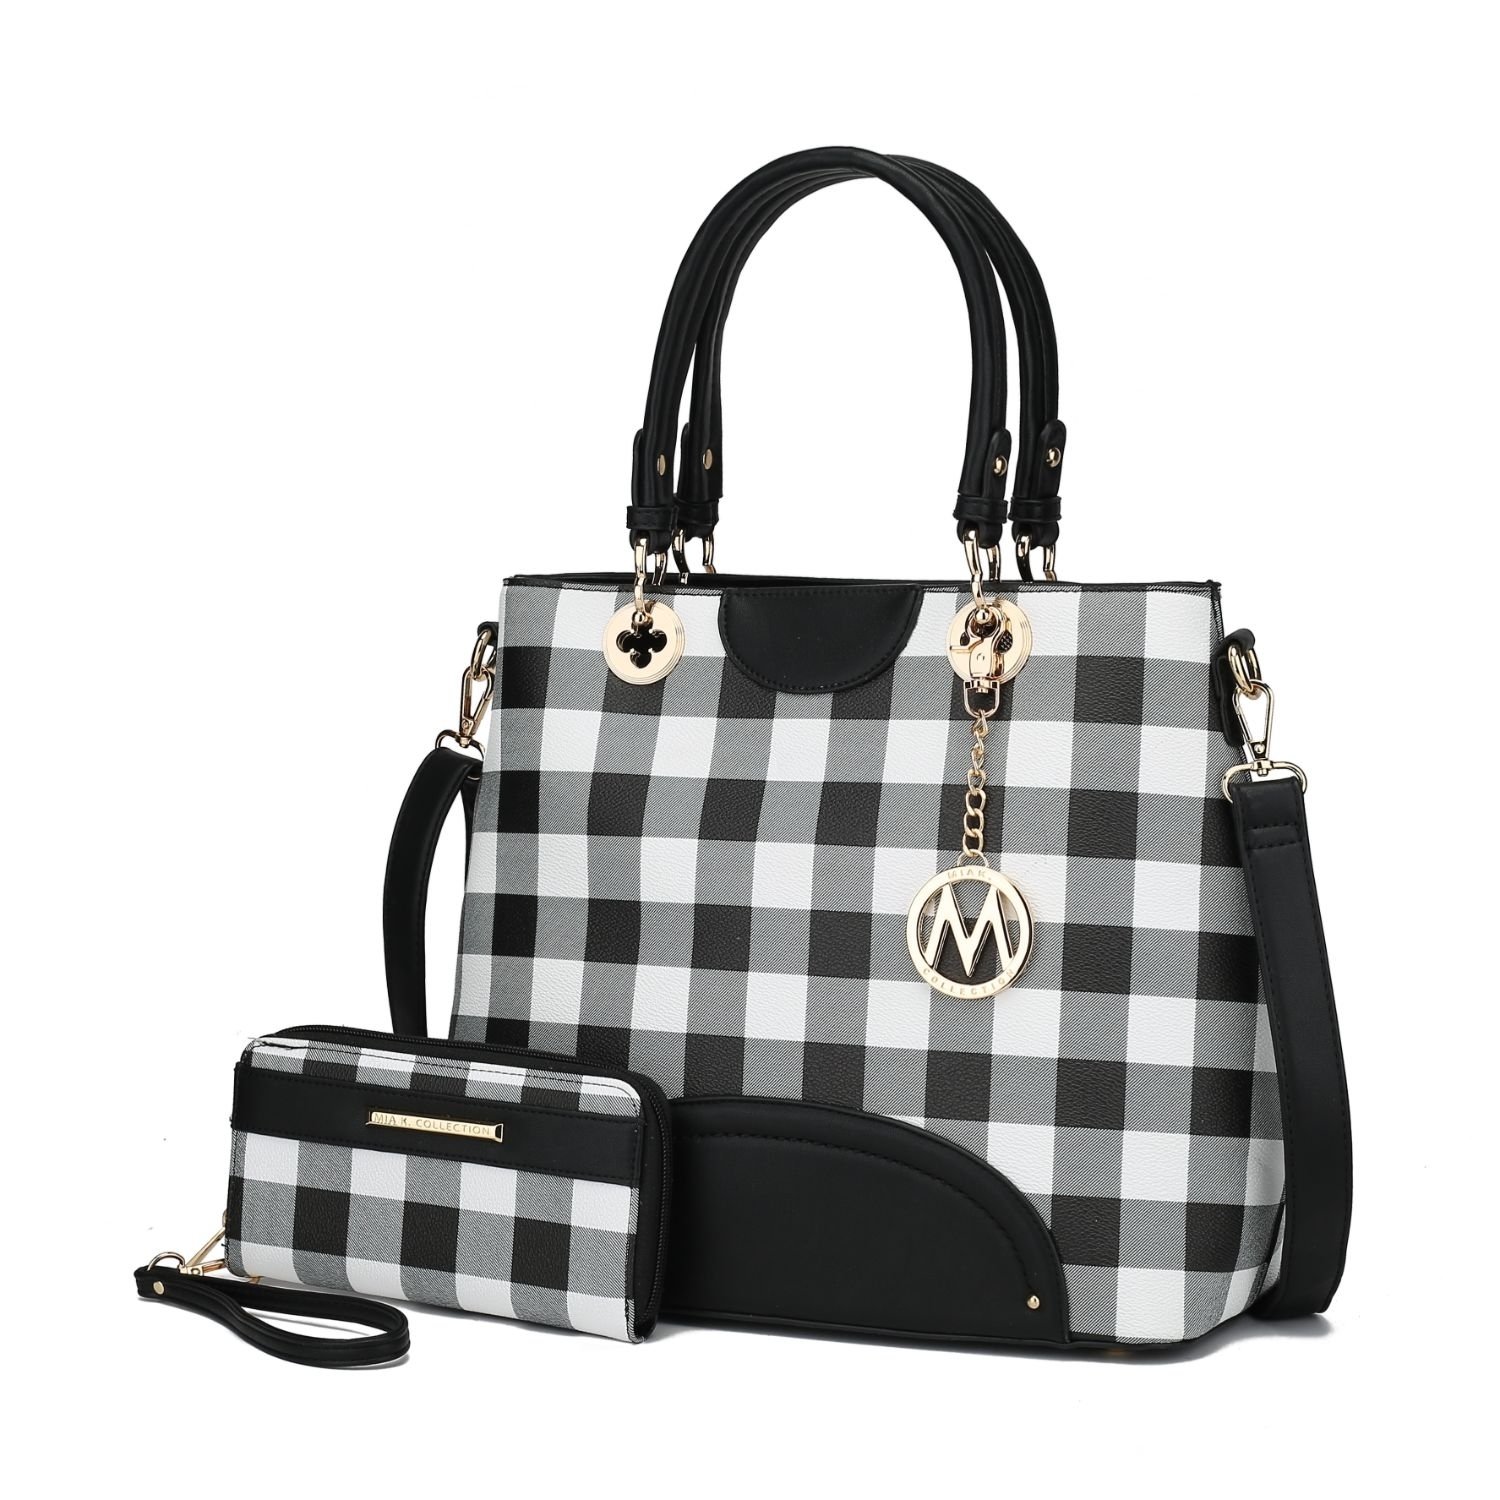 MKF Collection Gabriella Checkers Tote Handbag With Wallet By Mia K. - Red